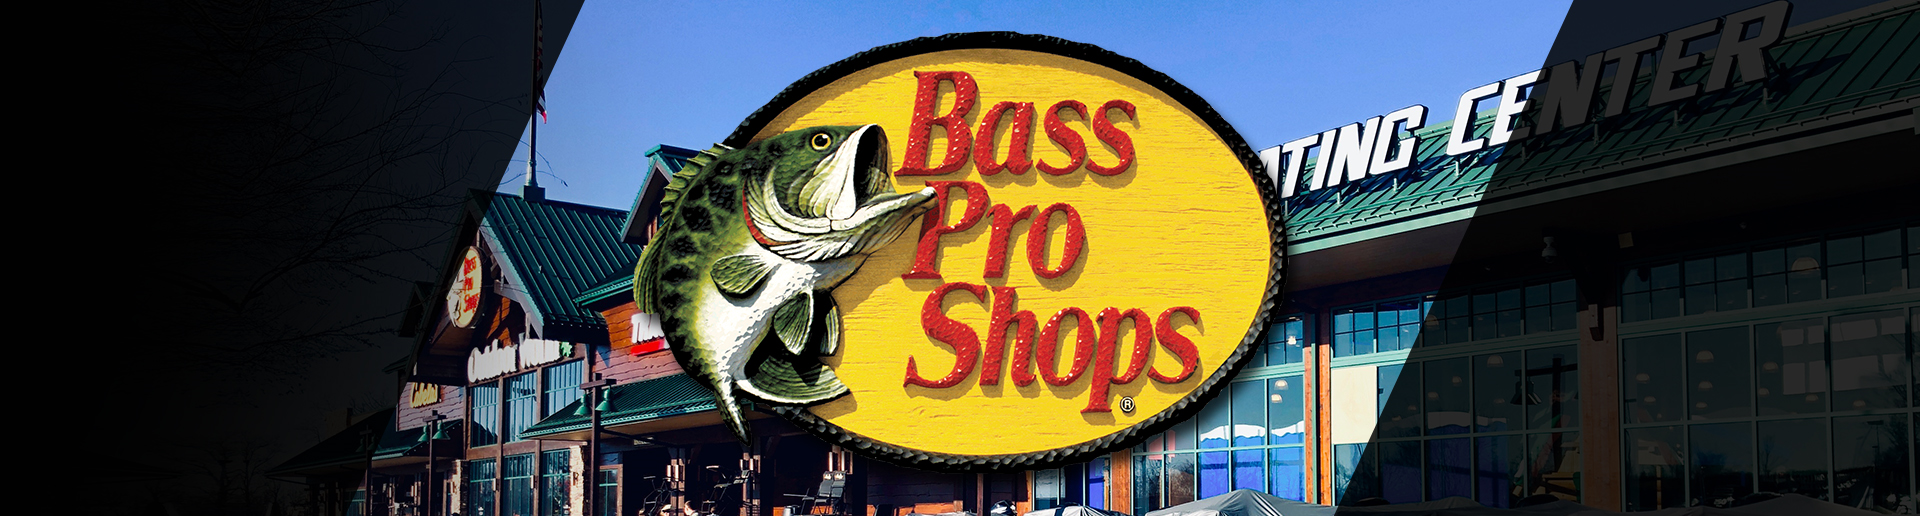 Bass Proshop